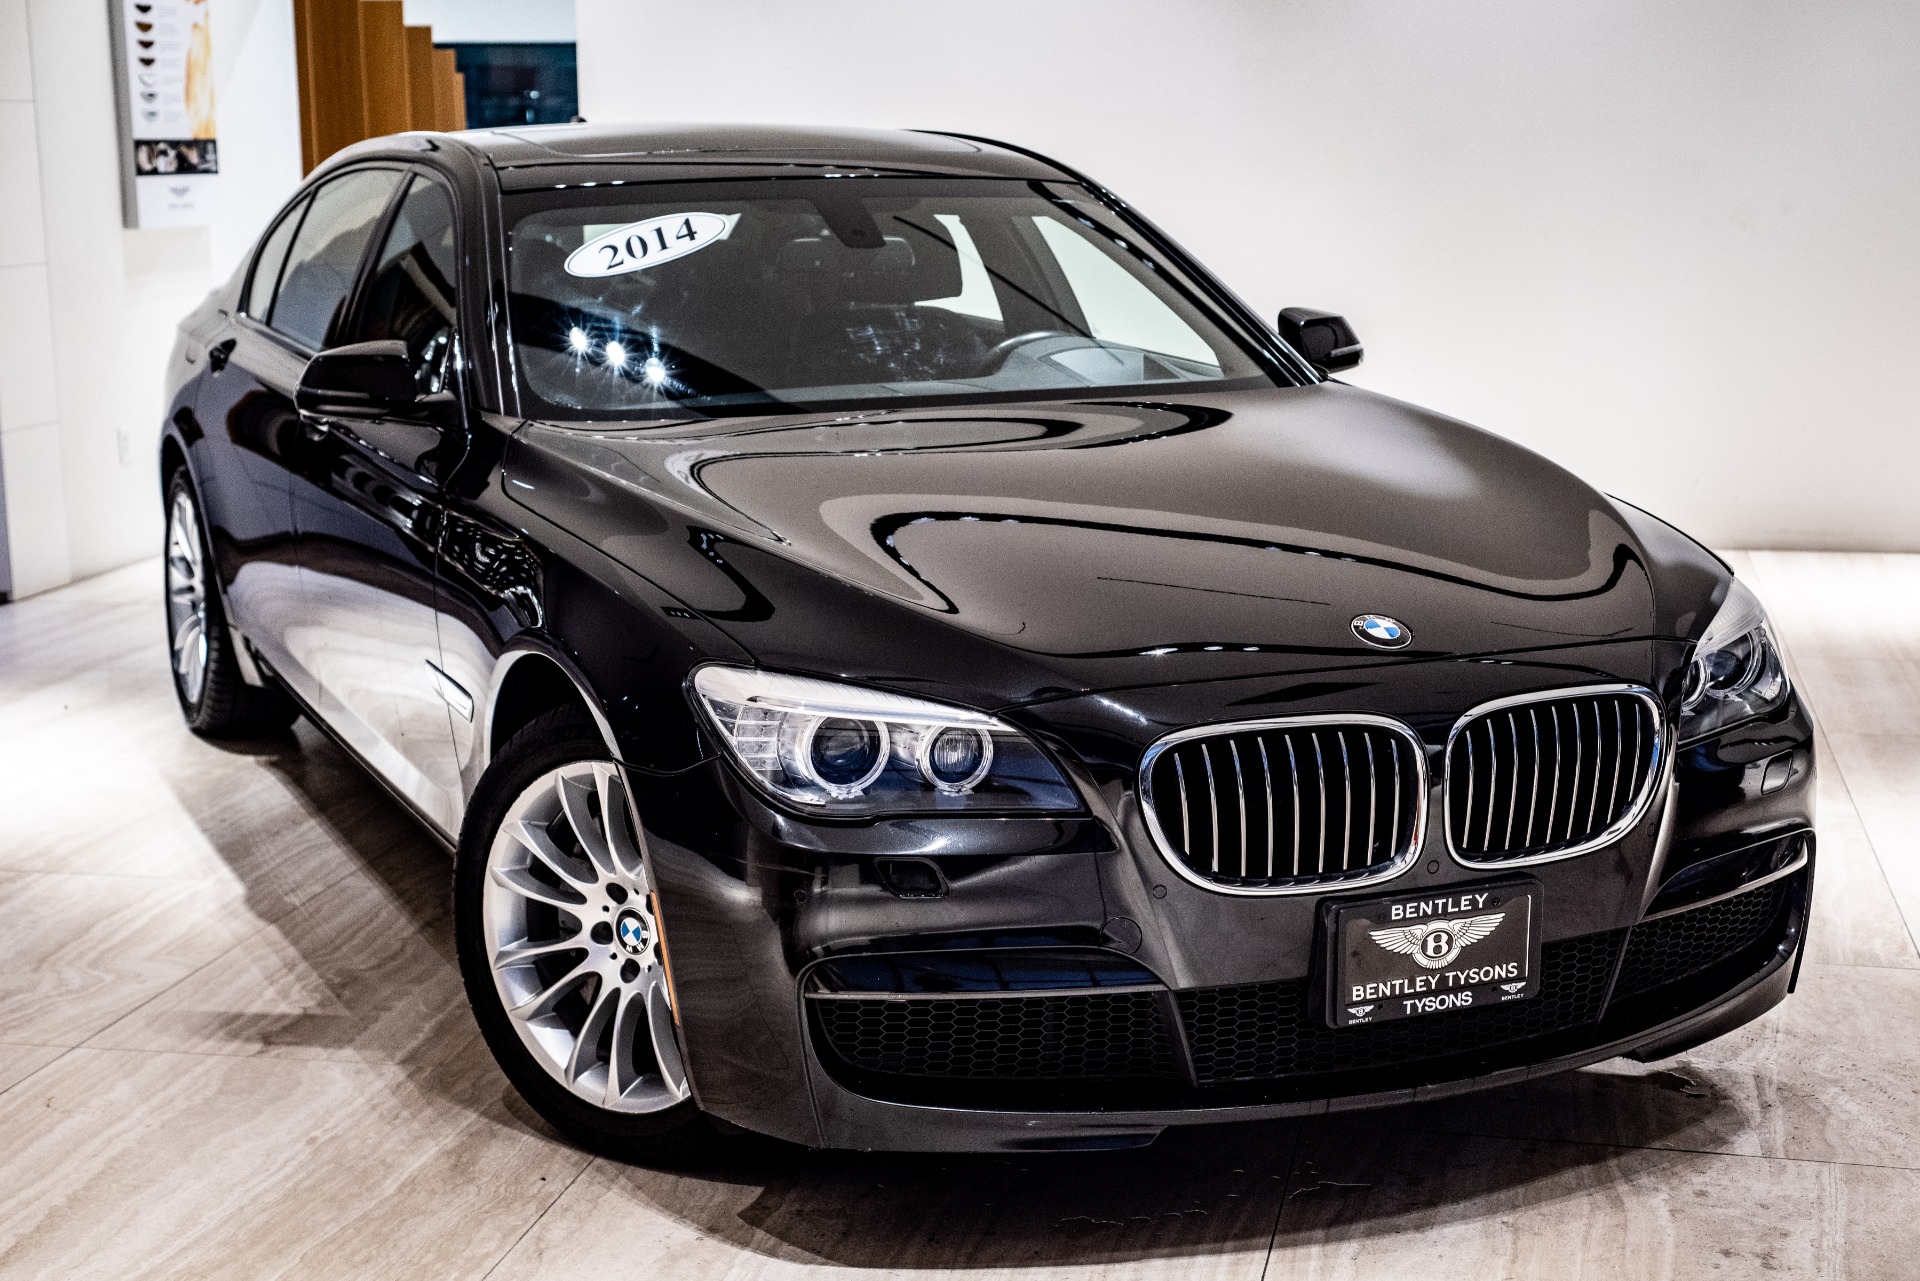 2014 BMW 7 Series 740Li xDrive Stock # P281877 for sale near Ashburn